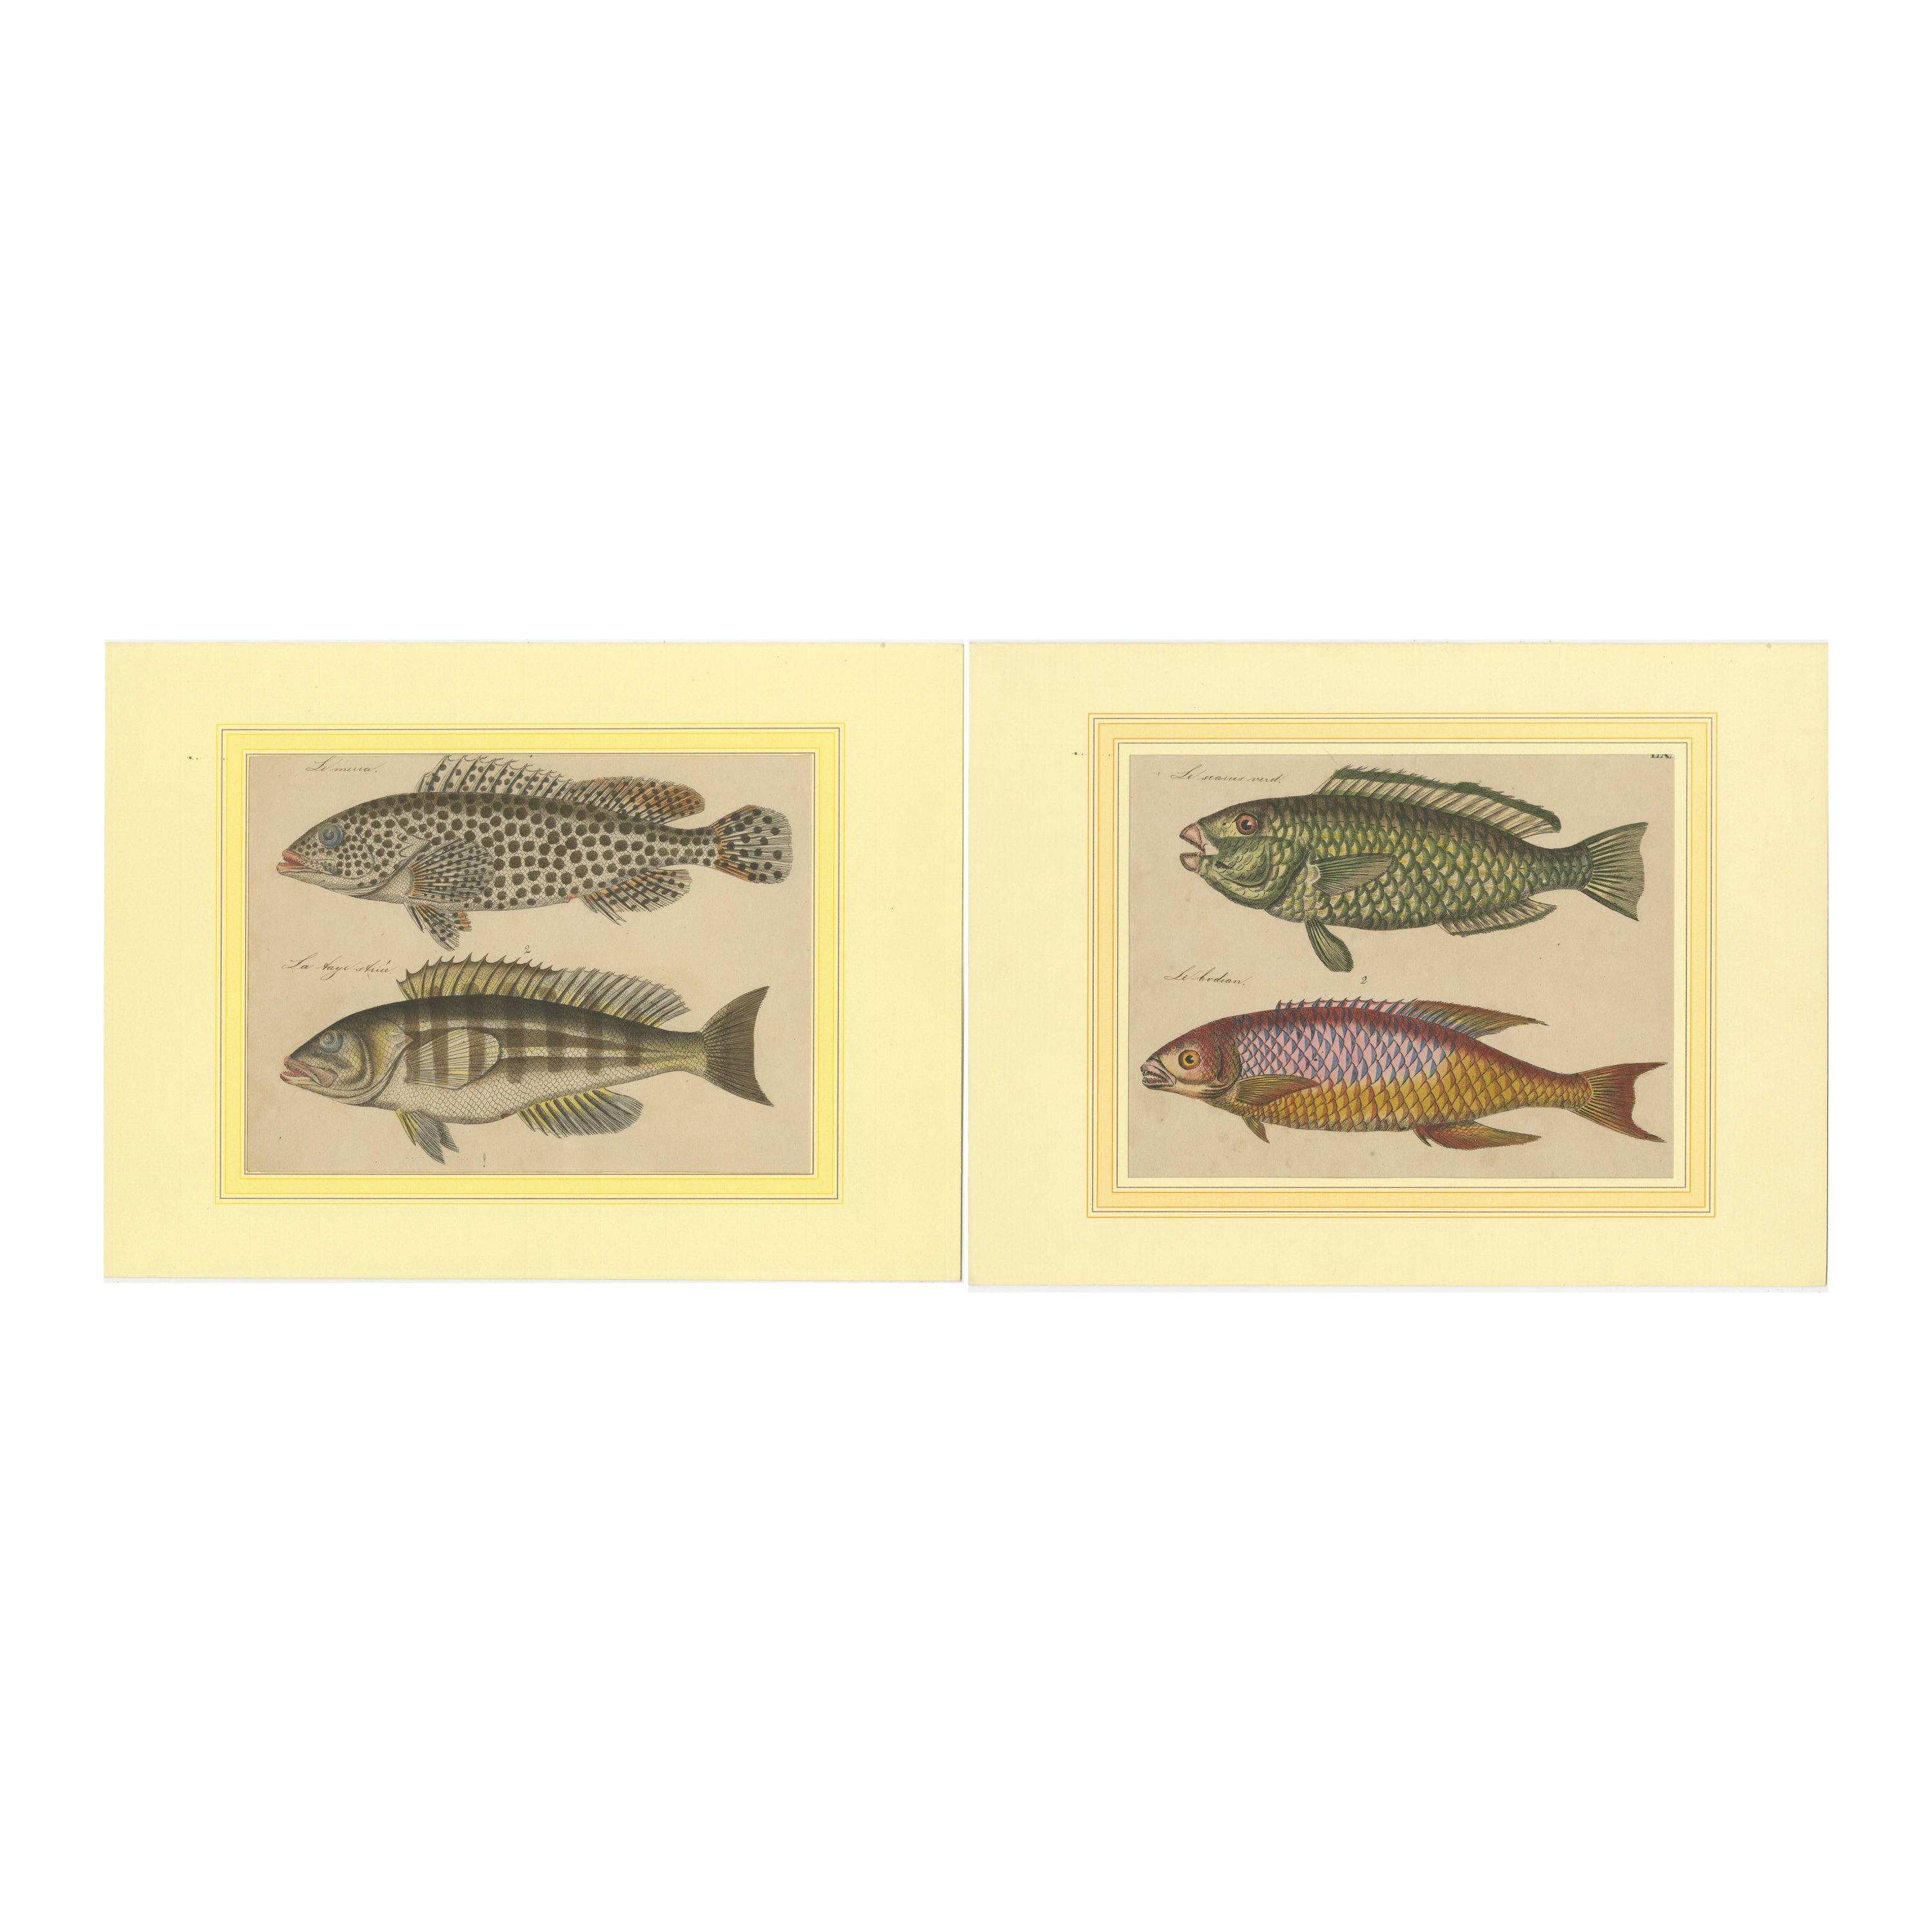 1819 Marine Splendor: Original Hand-Colored Engravings of Fishes